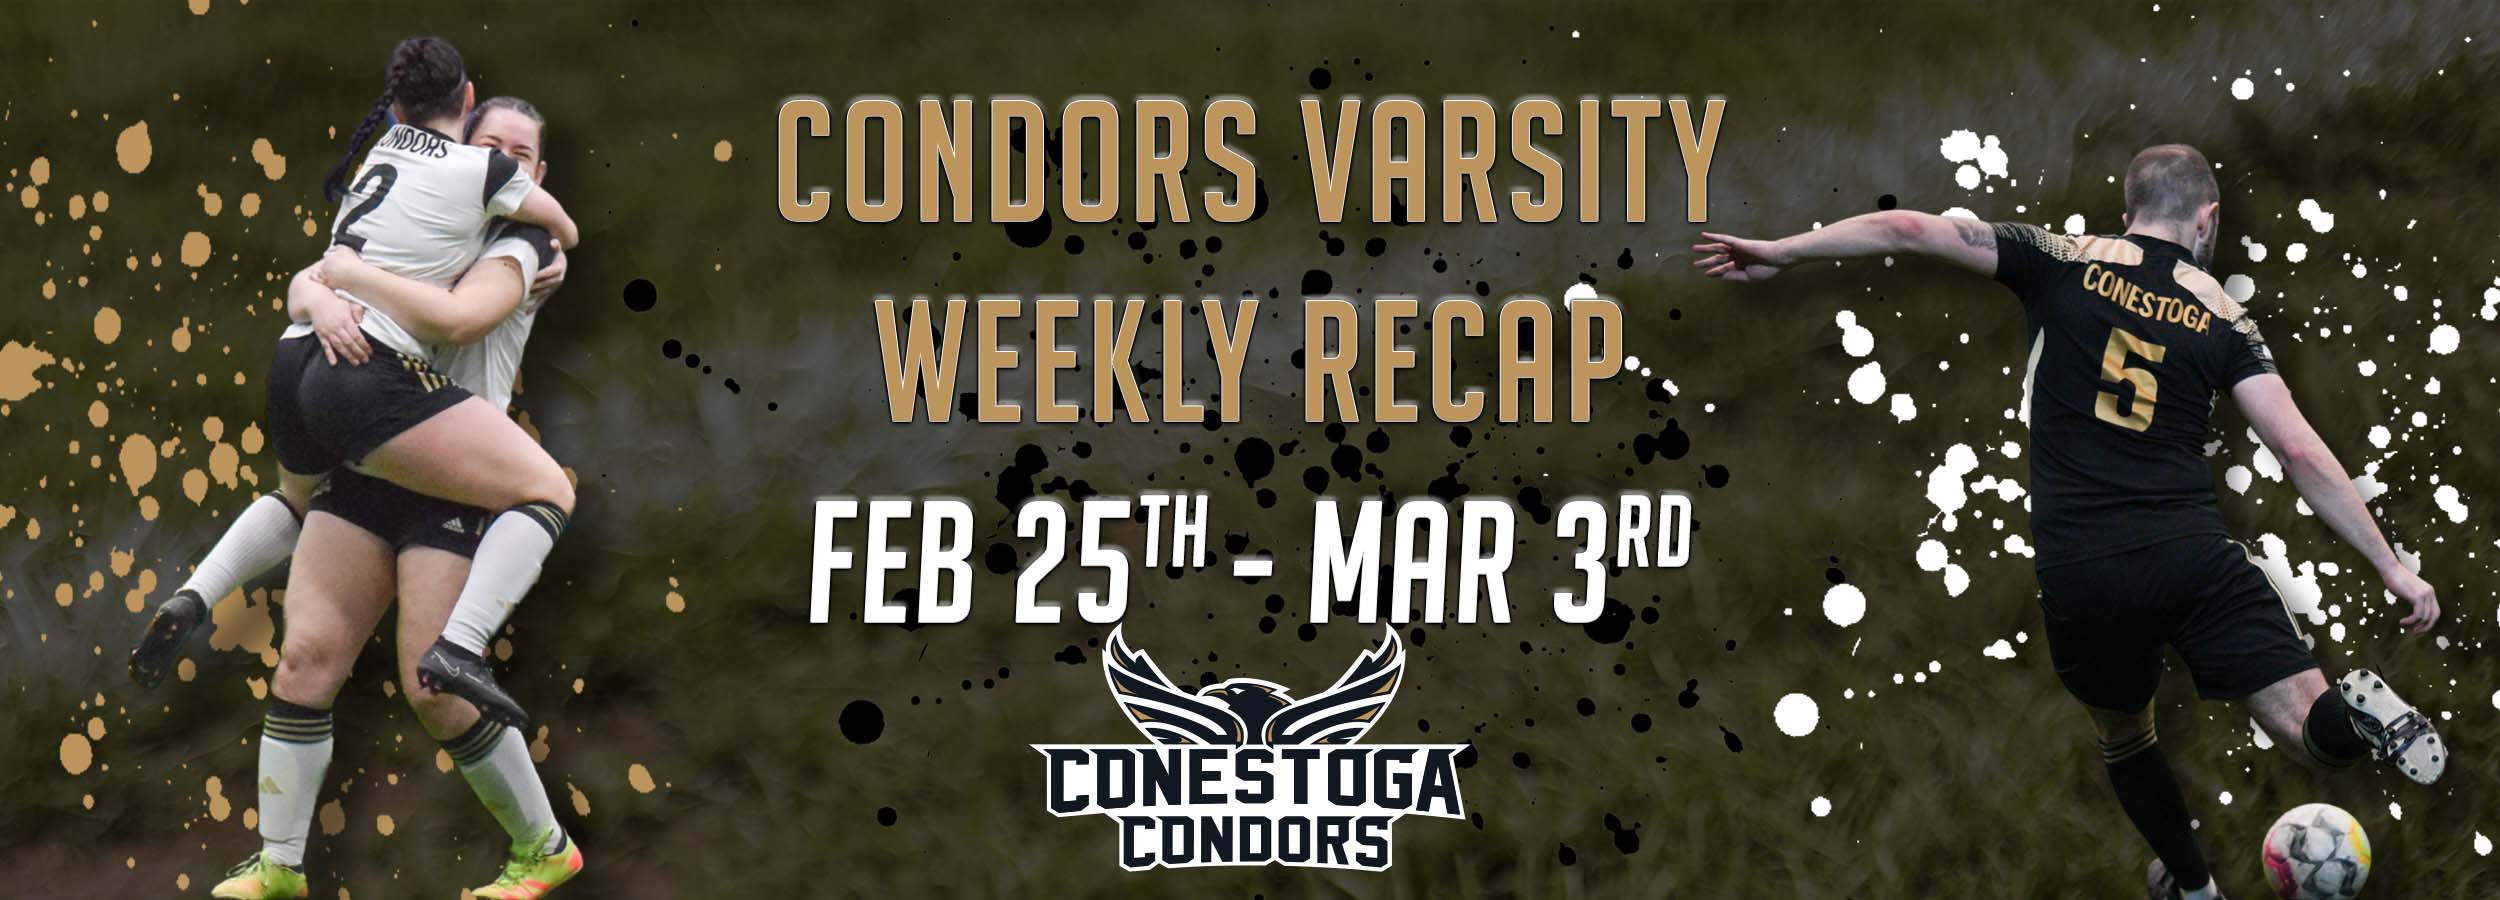 Condors Varsity Weekly Recap - February 25th - March 3rd